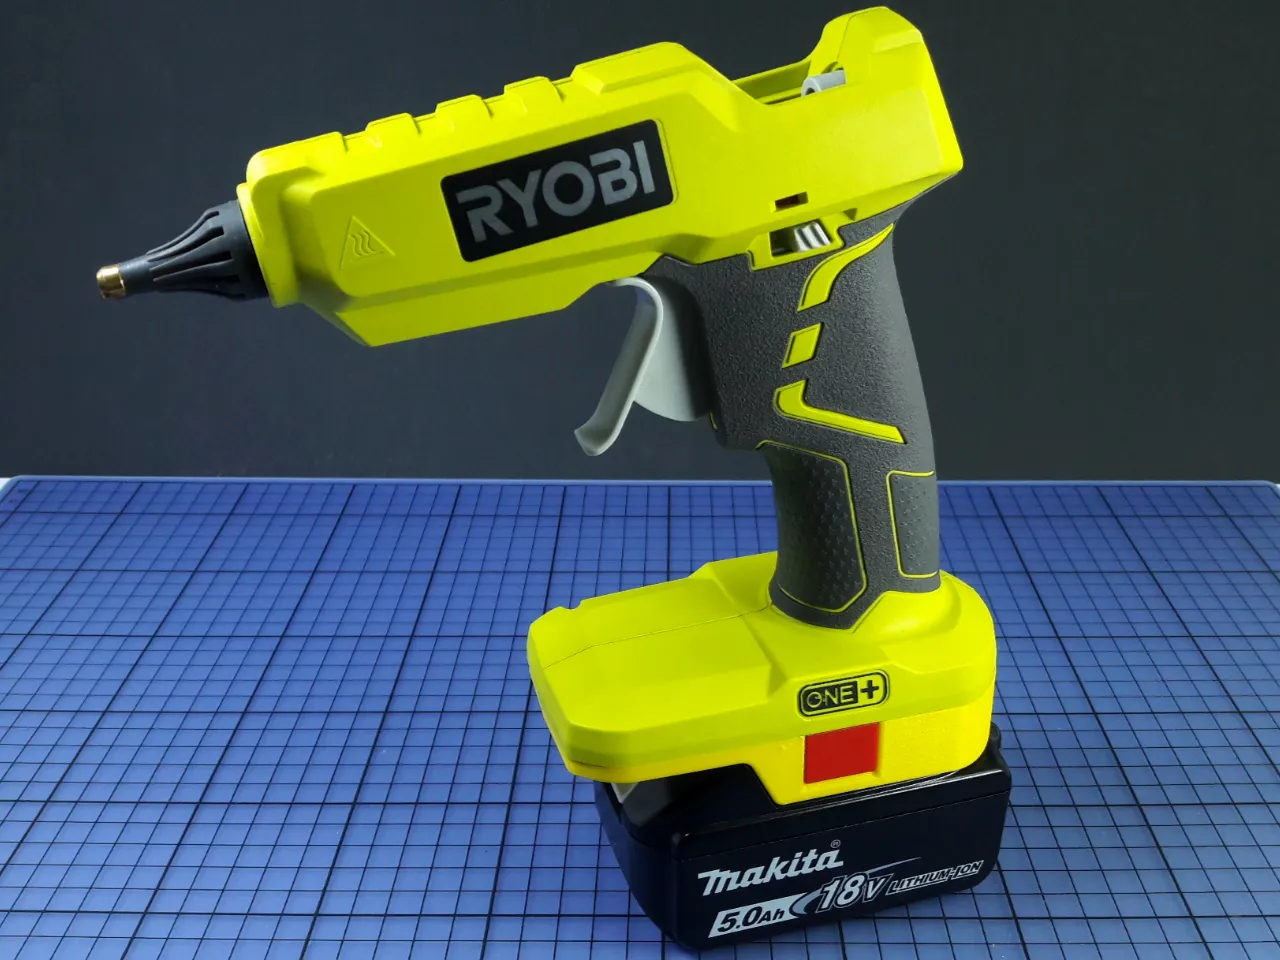 Ryobi glue gun with Makita battery 